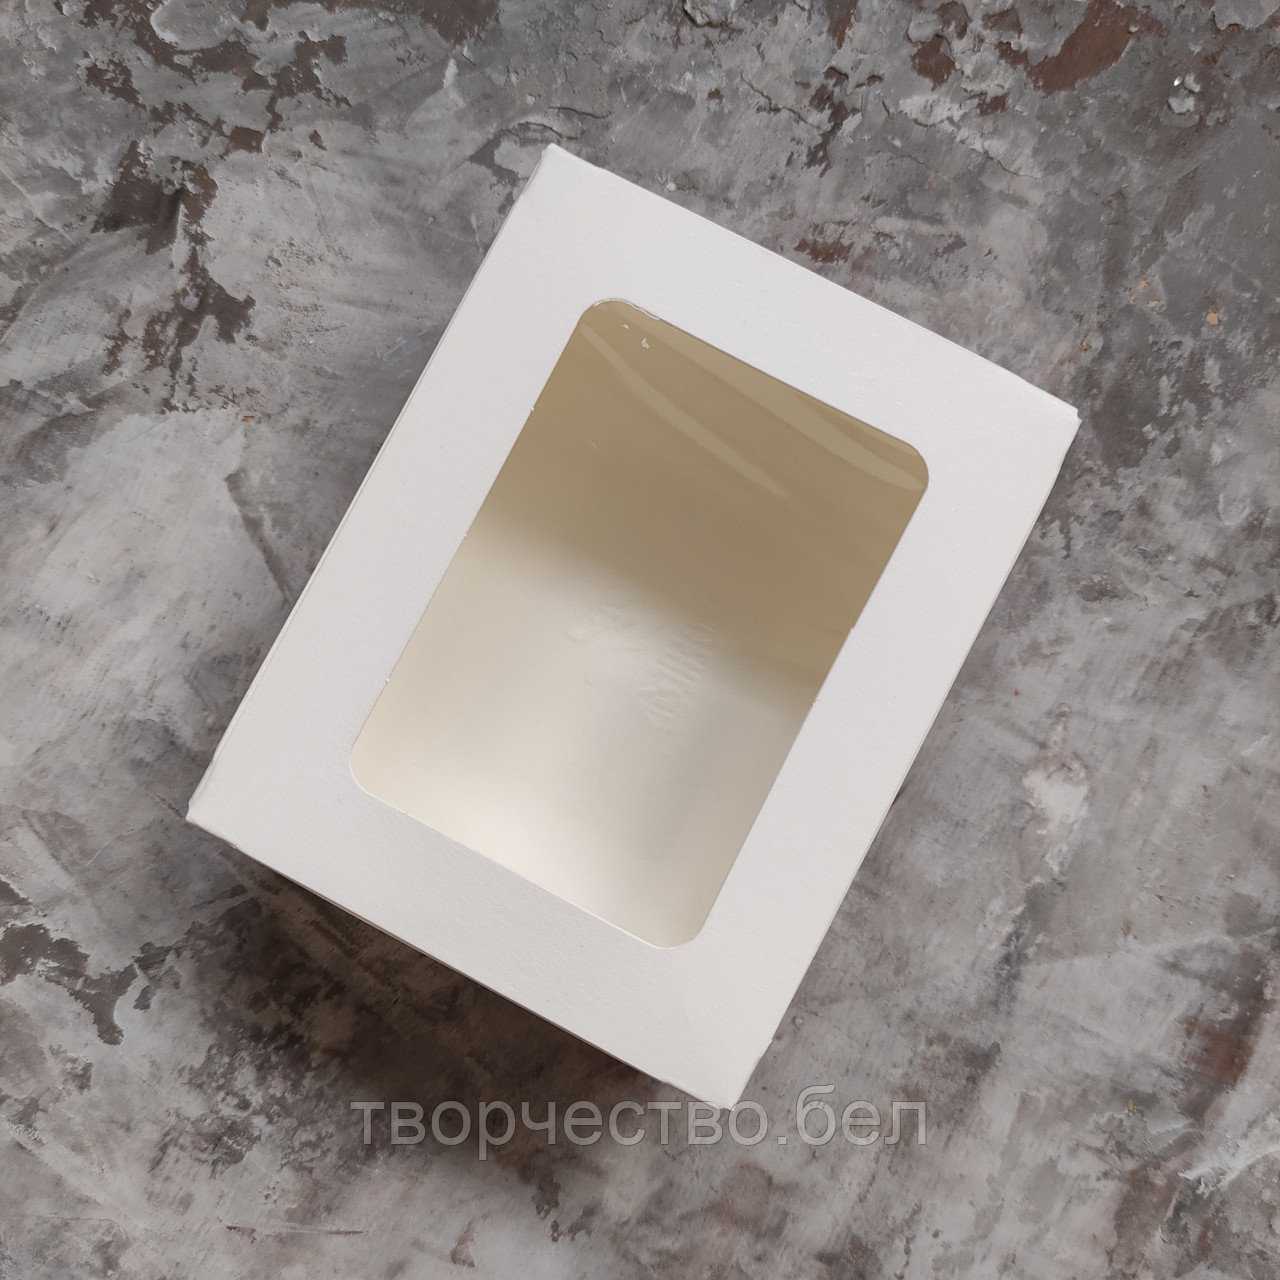 Коробка крафт белая с окошком №1, 10×8×3,6